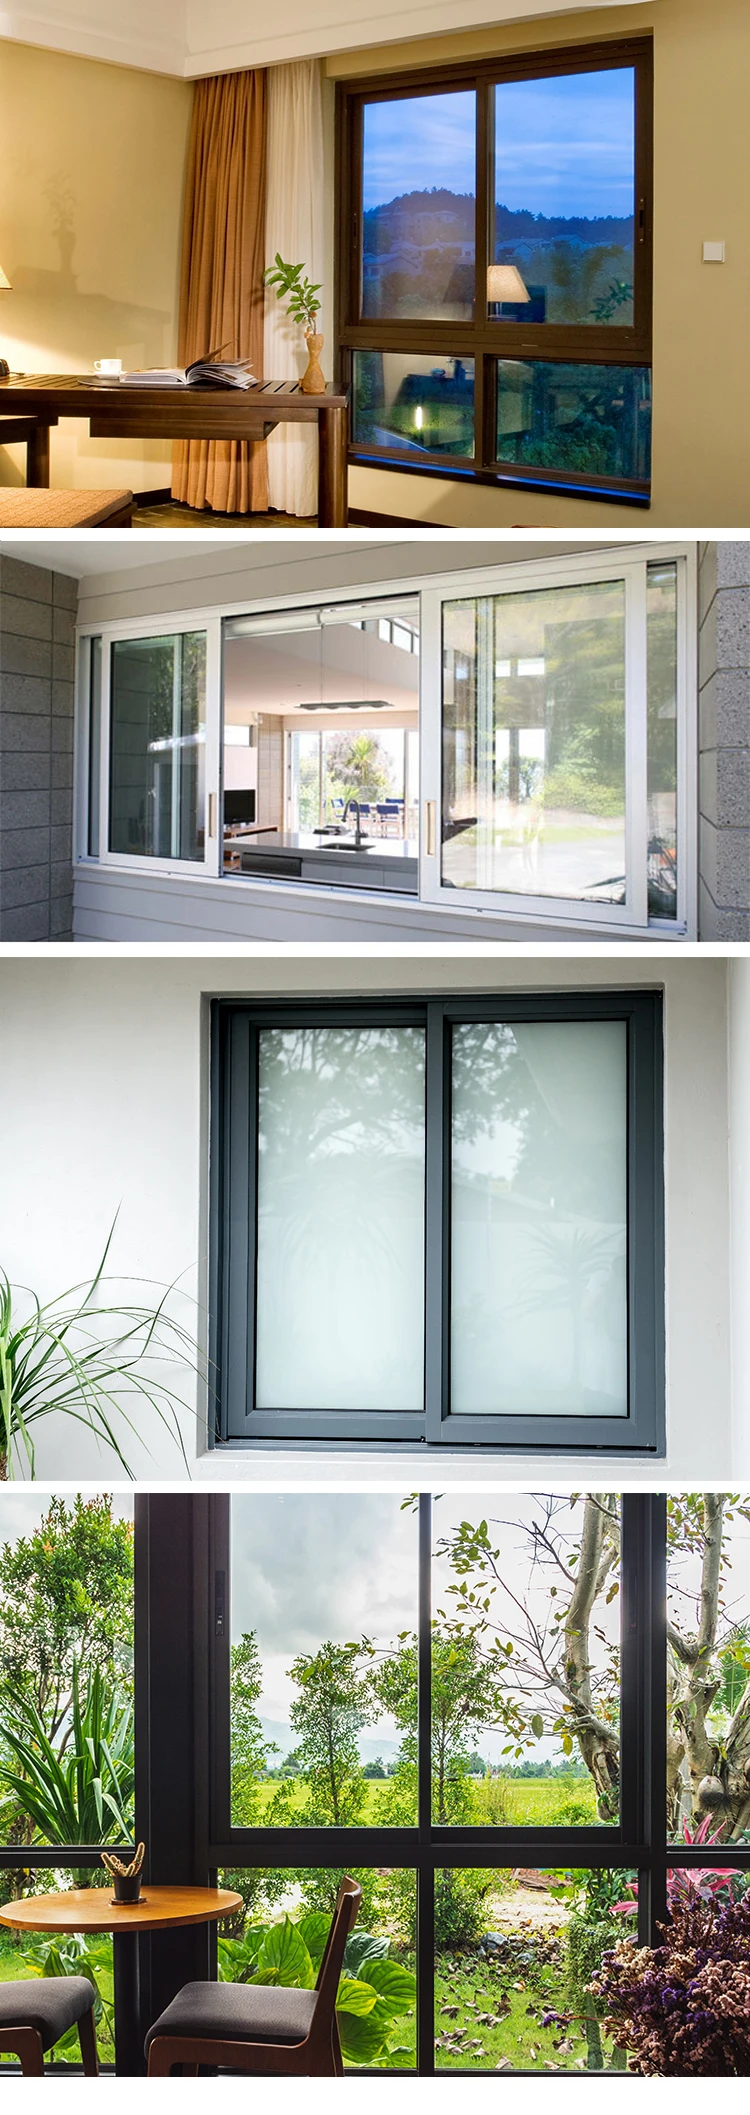 Wholesale Cladding Wood Grain Aluminum Window Latvia Sash And System Grill Design 2 Pane Frame Sliding Window for Sale